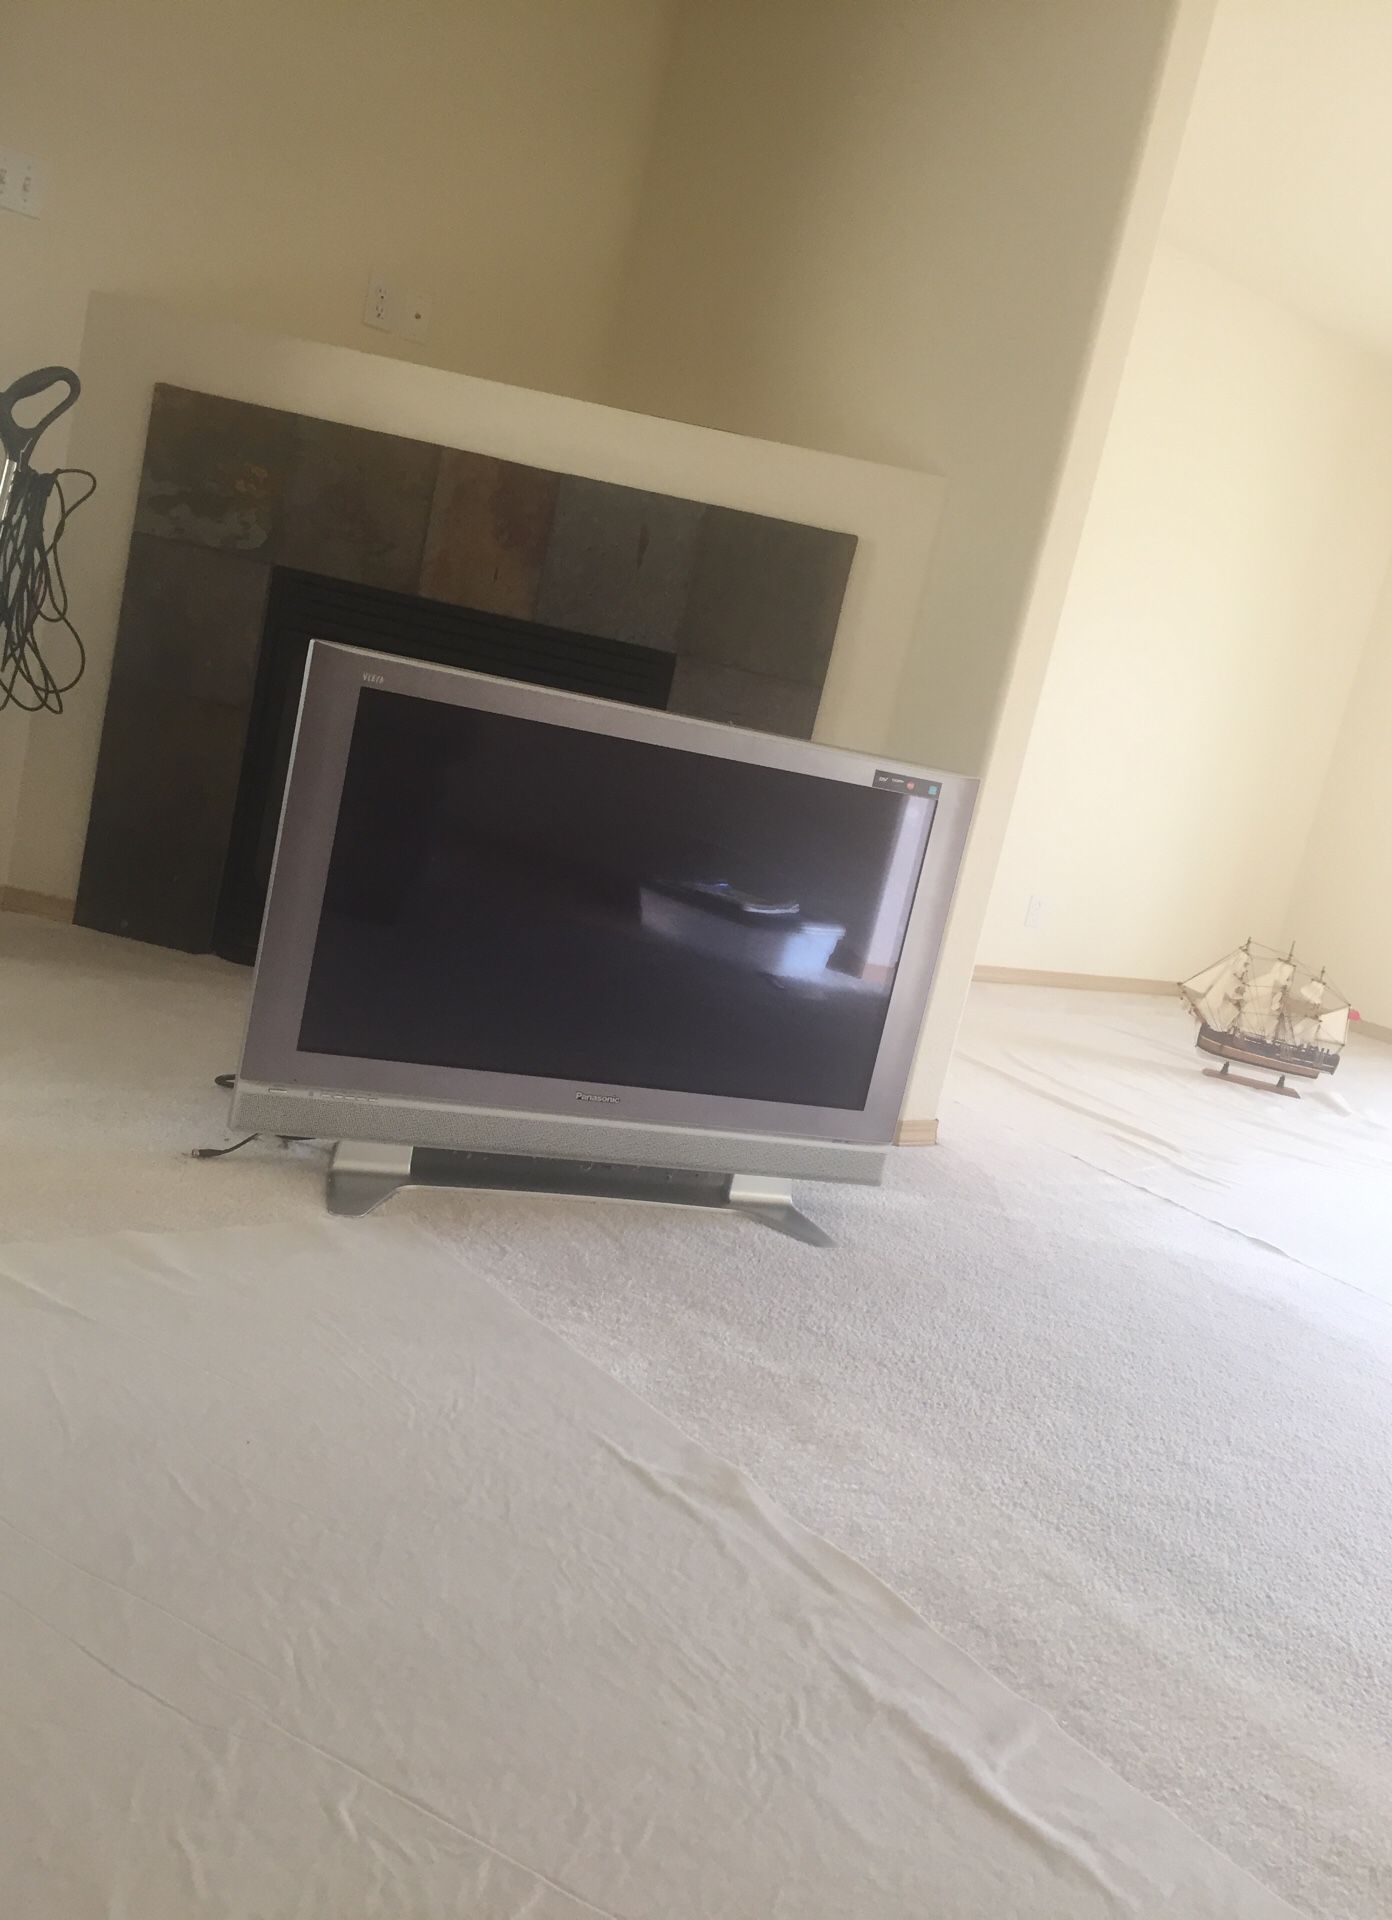 Big tv Panasonic! From Costco flat screen